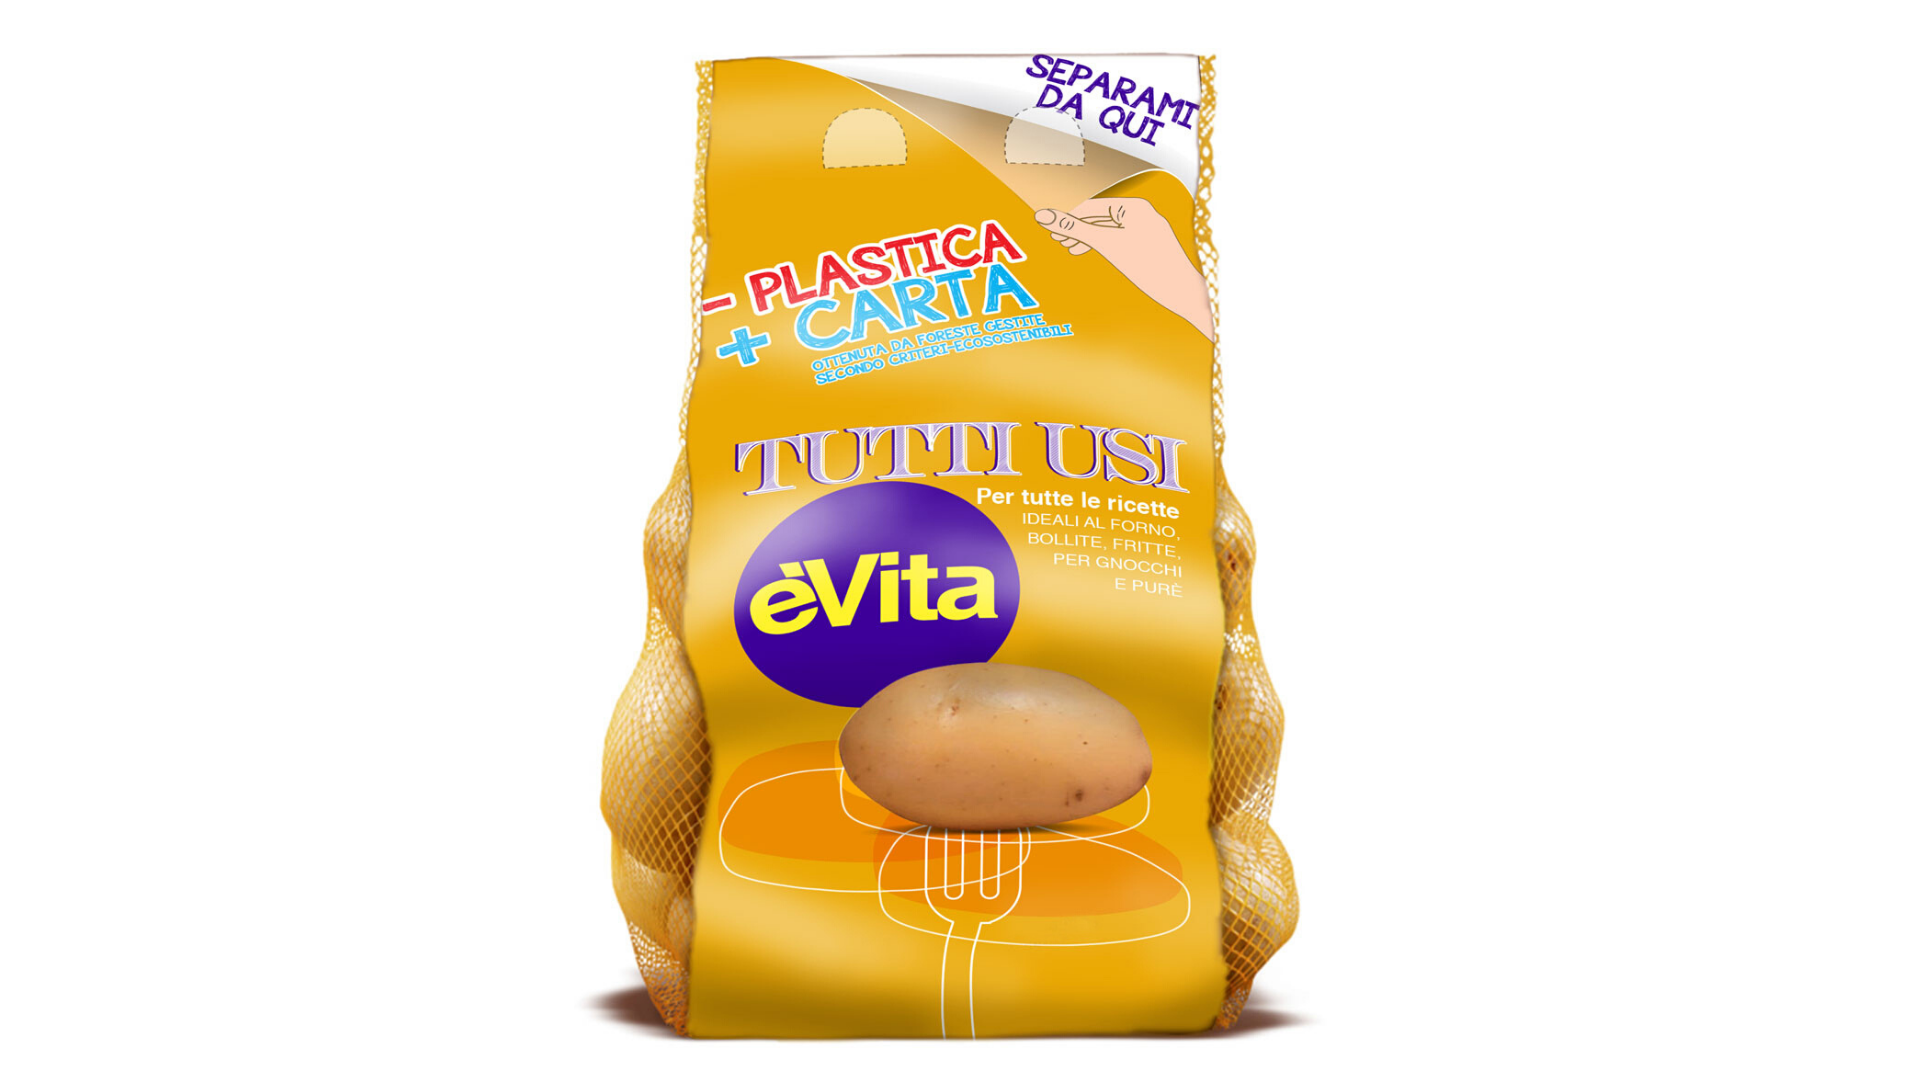 Romagnoli F.lli chooses new environmentally friendly packaging for its all-uses èVita potatoes